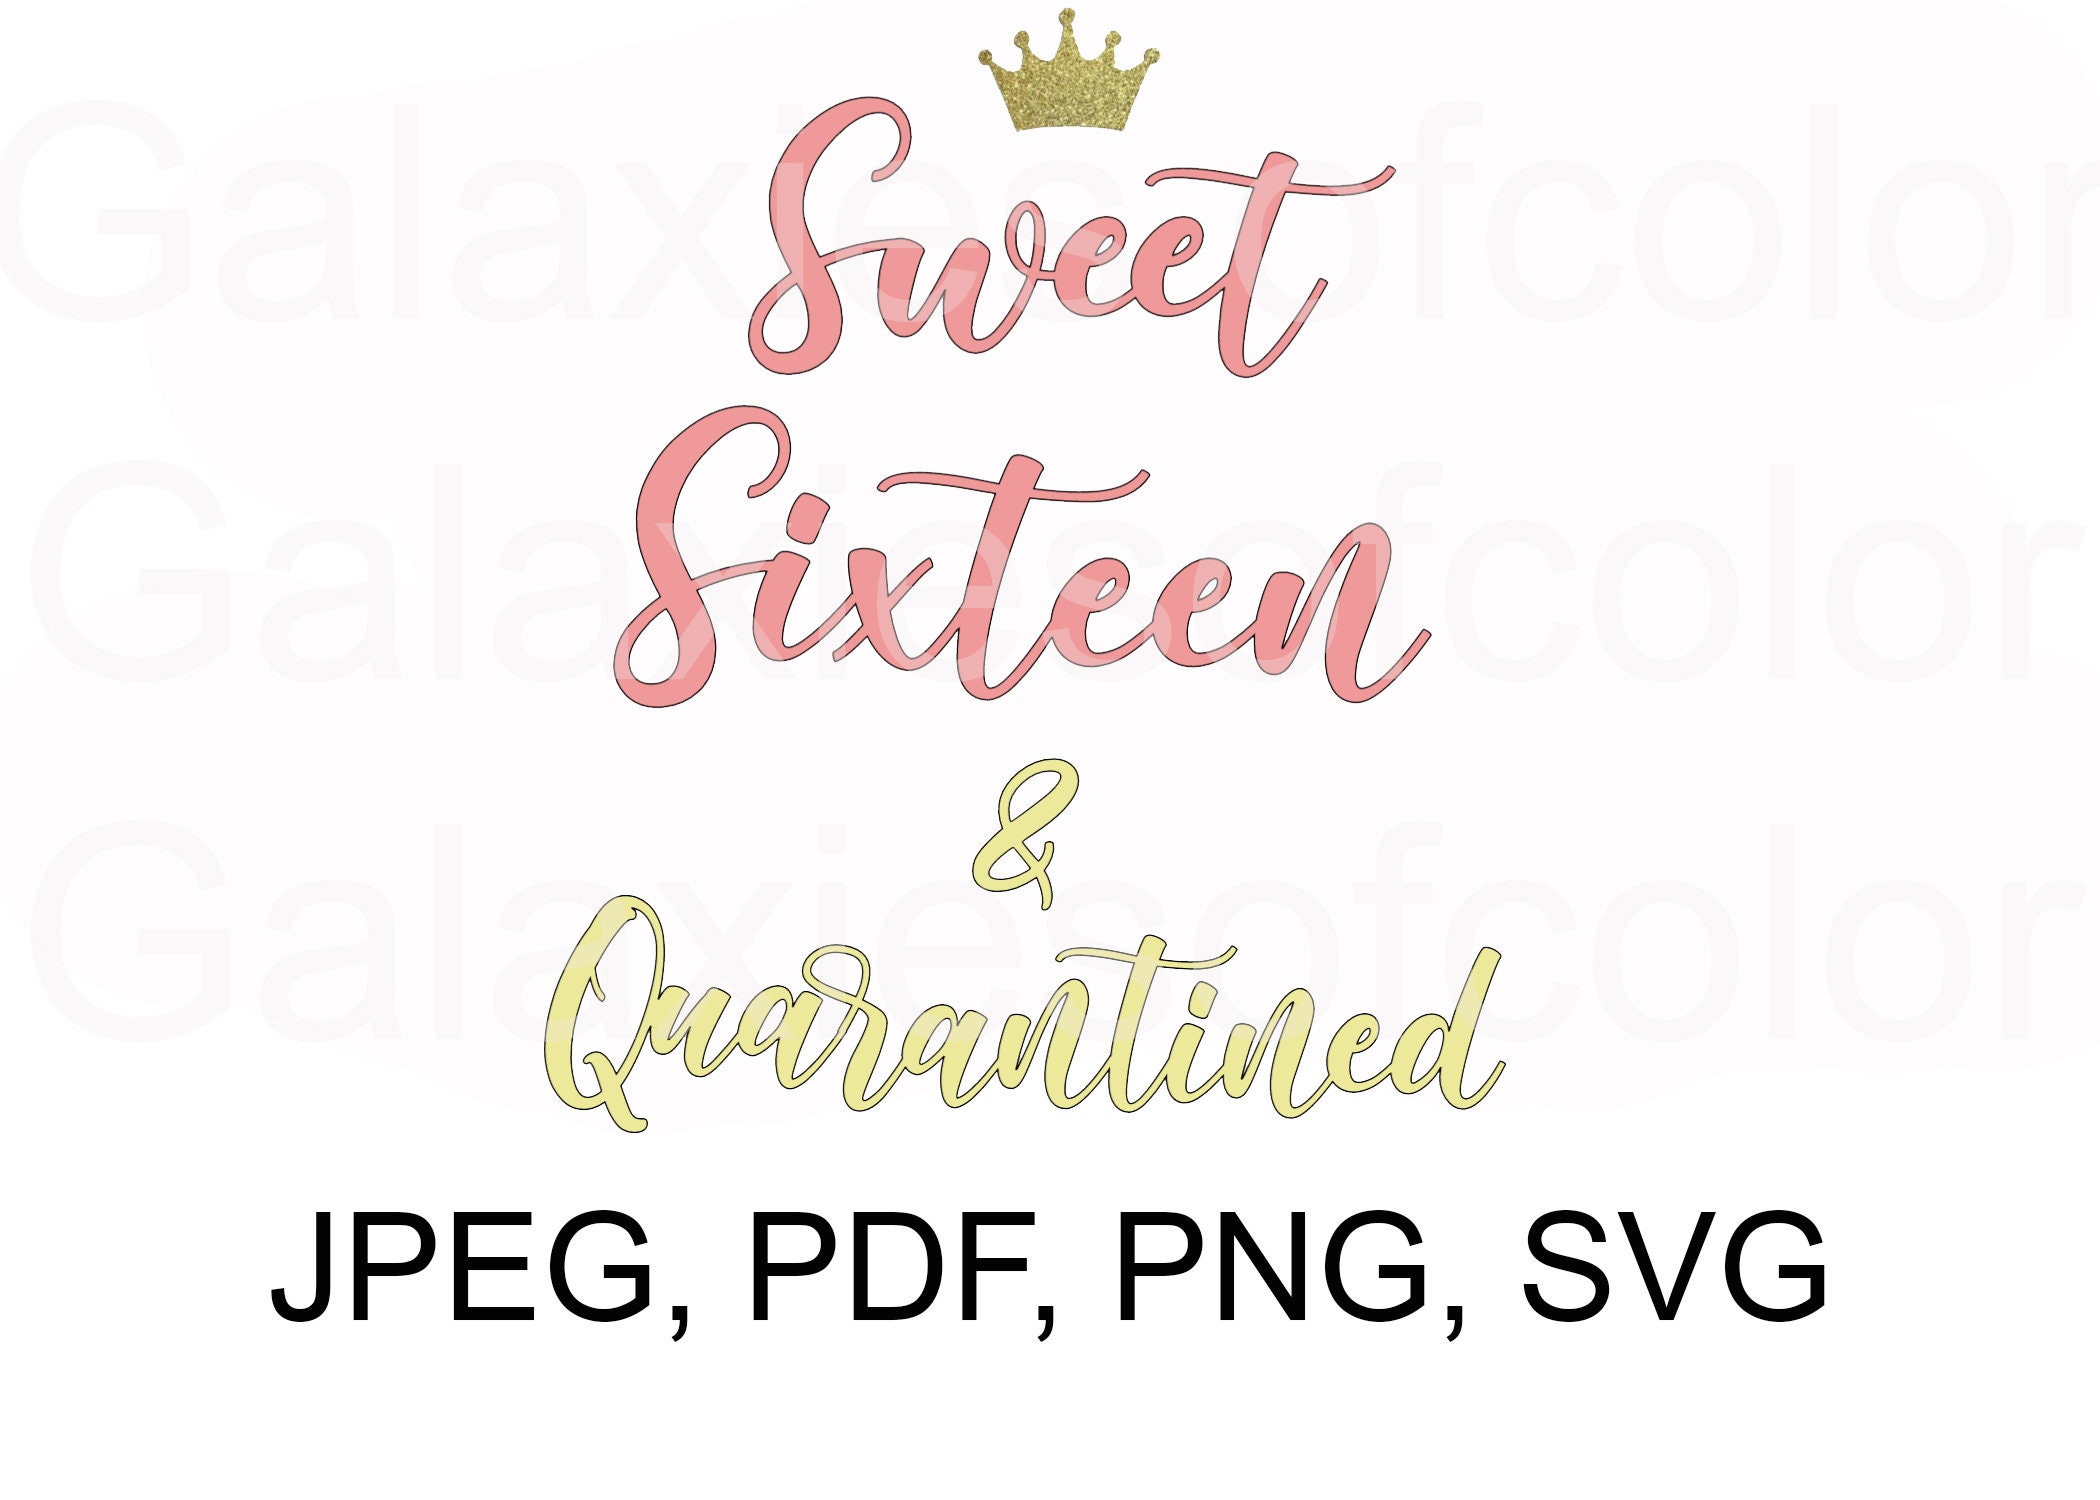 Free Free 82 Free Sweet 16 Svg SVG PNG EPS DXF File